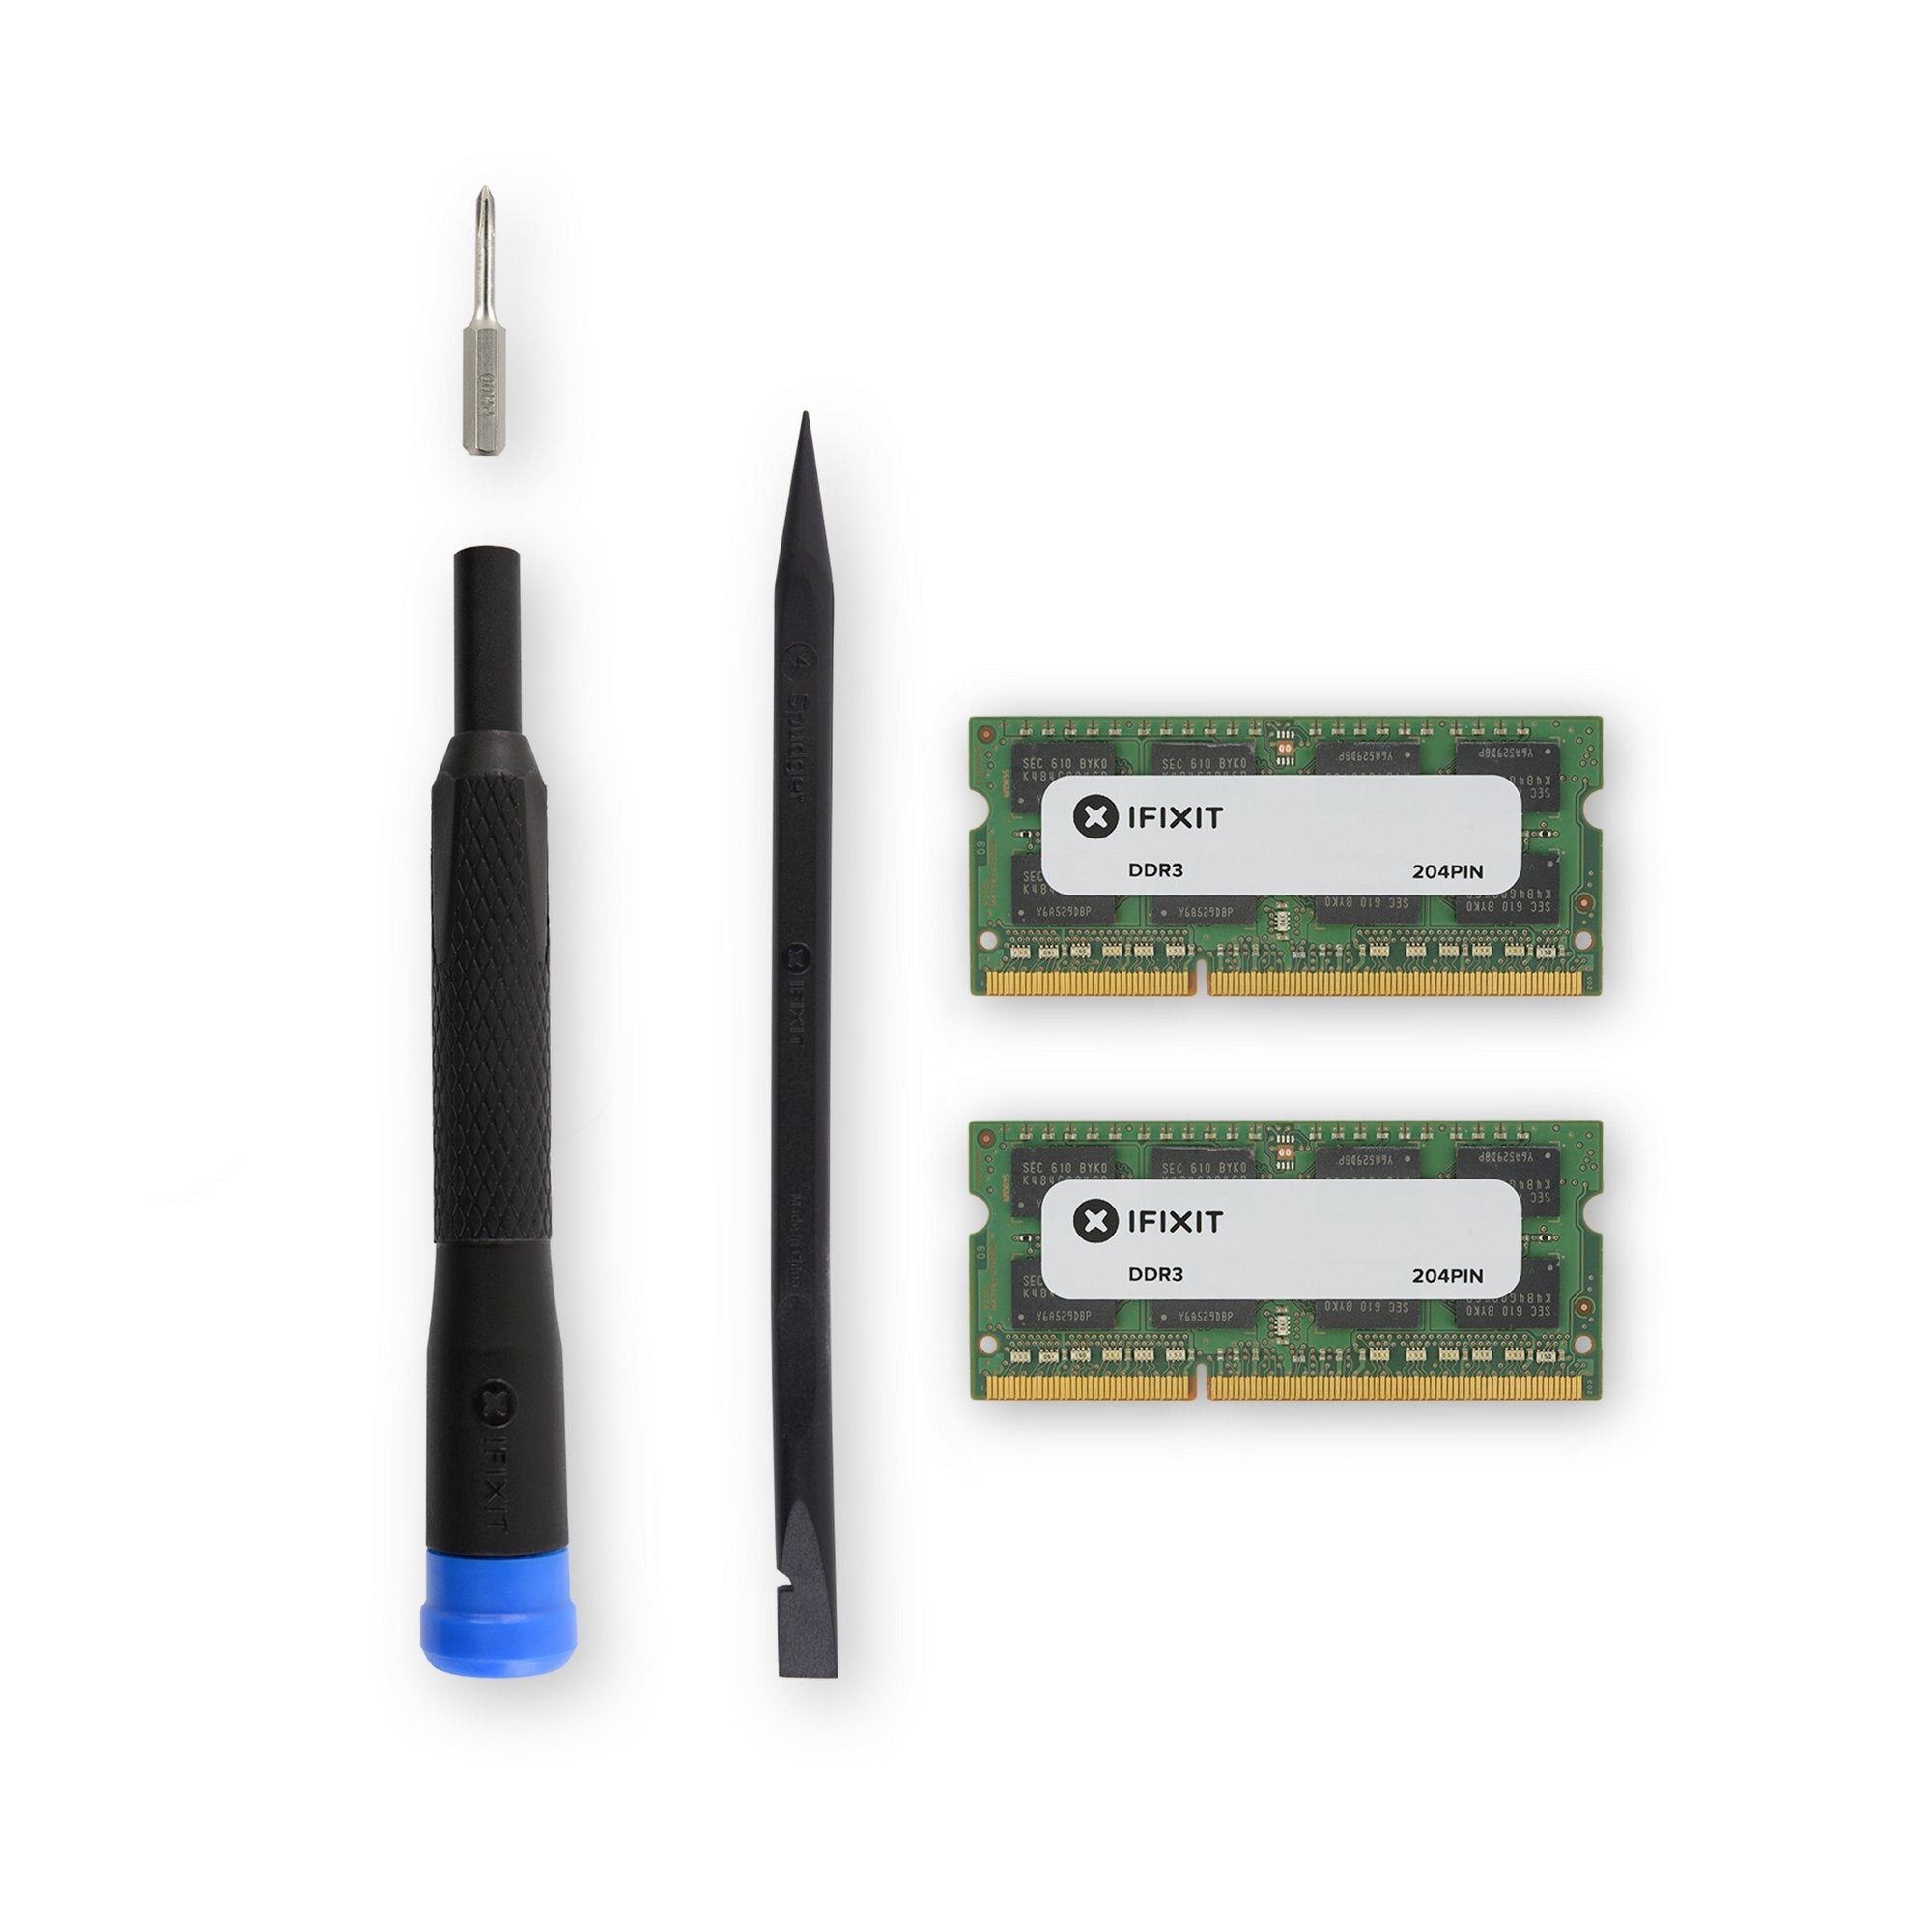 MacBook Pro 15" Unibody (Mid 2009) Memory Maxxer RAM Upgrade Kit New